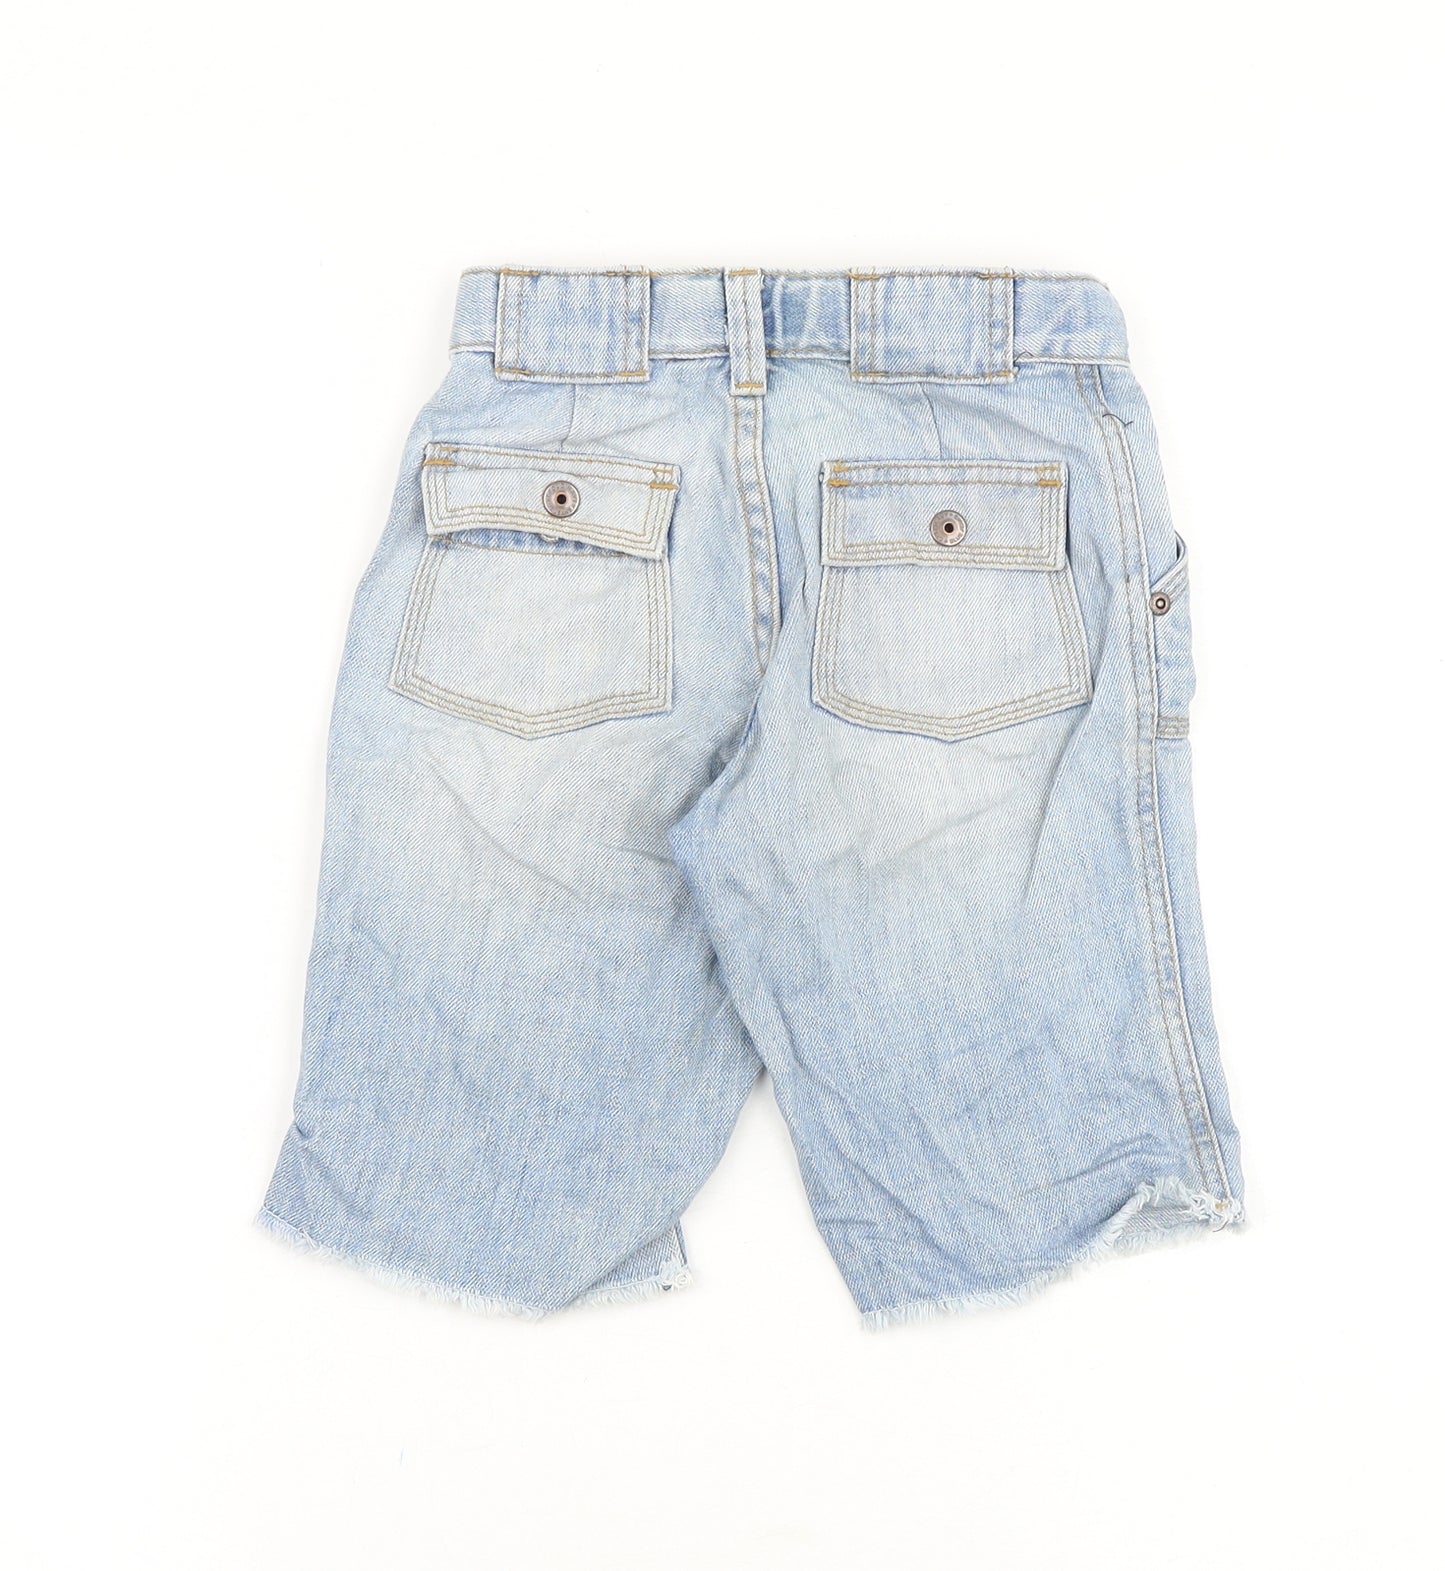 Old Navy Boys Blue Cotton Bermuda Shorts Size 6 Years Regular Zip - Distressed